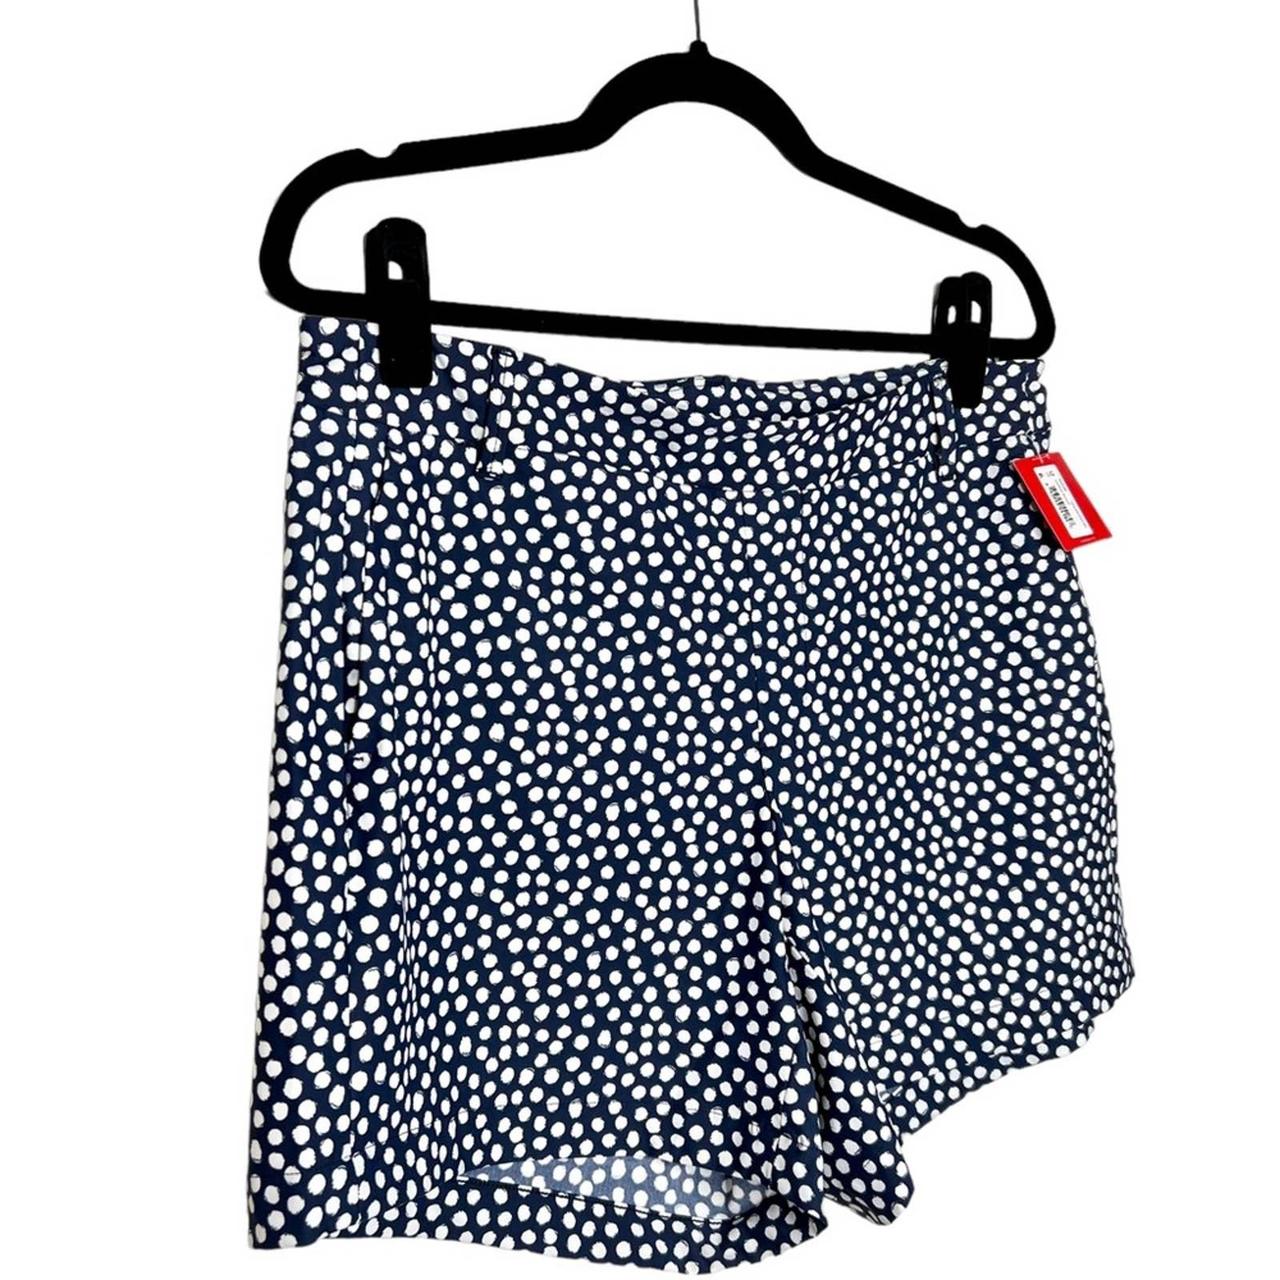 Spanx Women's Sunshine Shorts Polka Dot - Depop